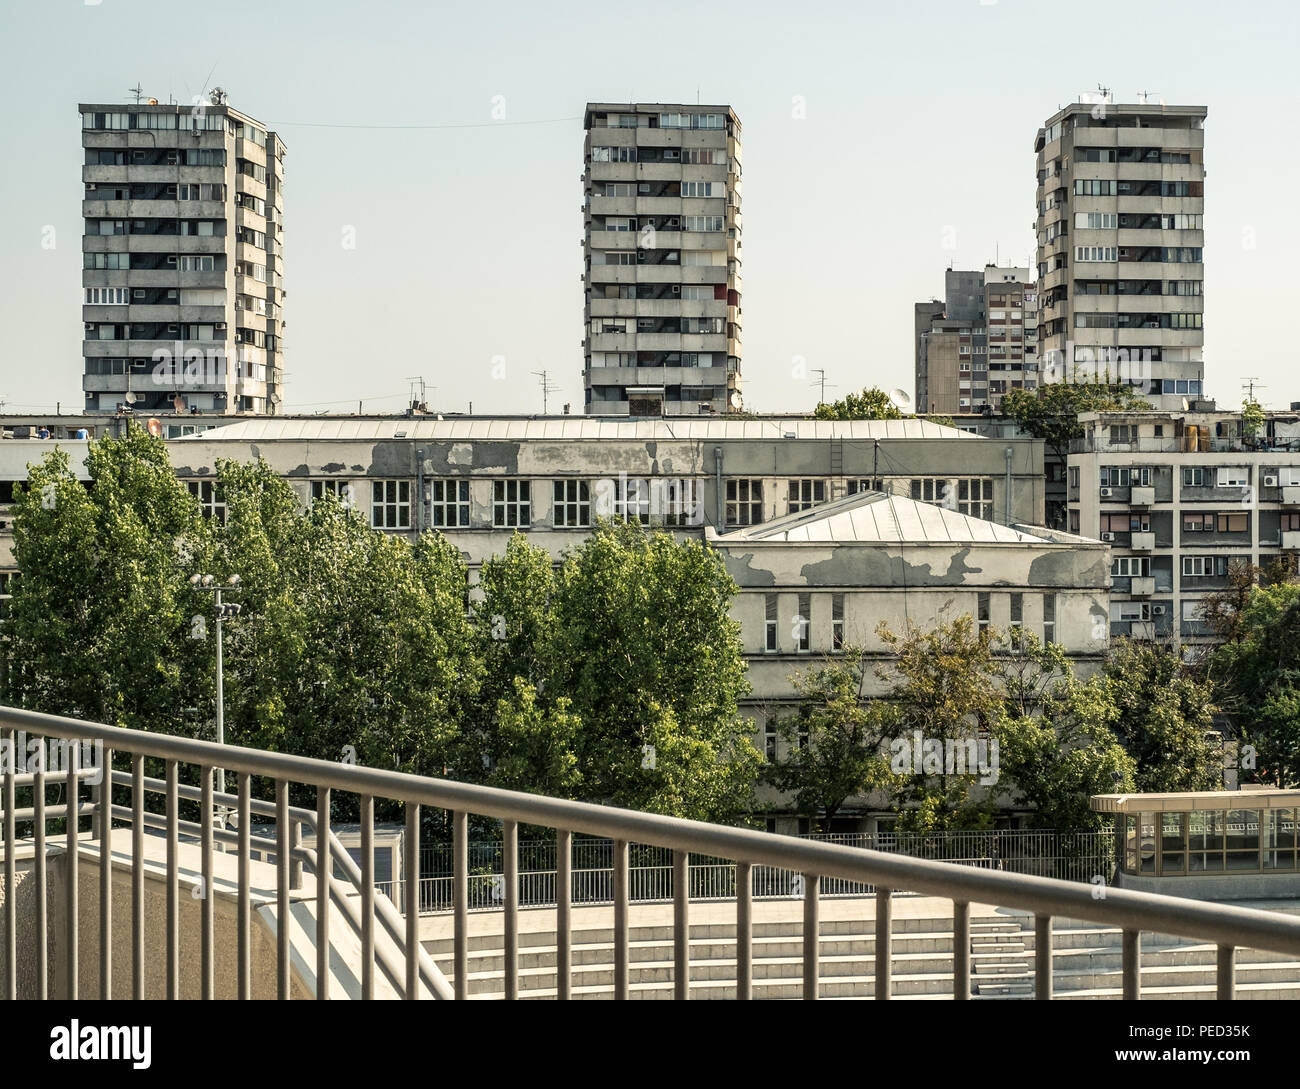 Belgrade, Serbia. August 27, 2017. Socialist era architecture, brutalist style example. Stock Photo